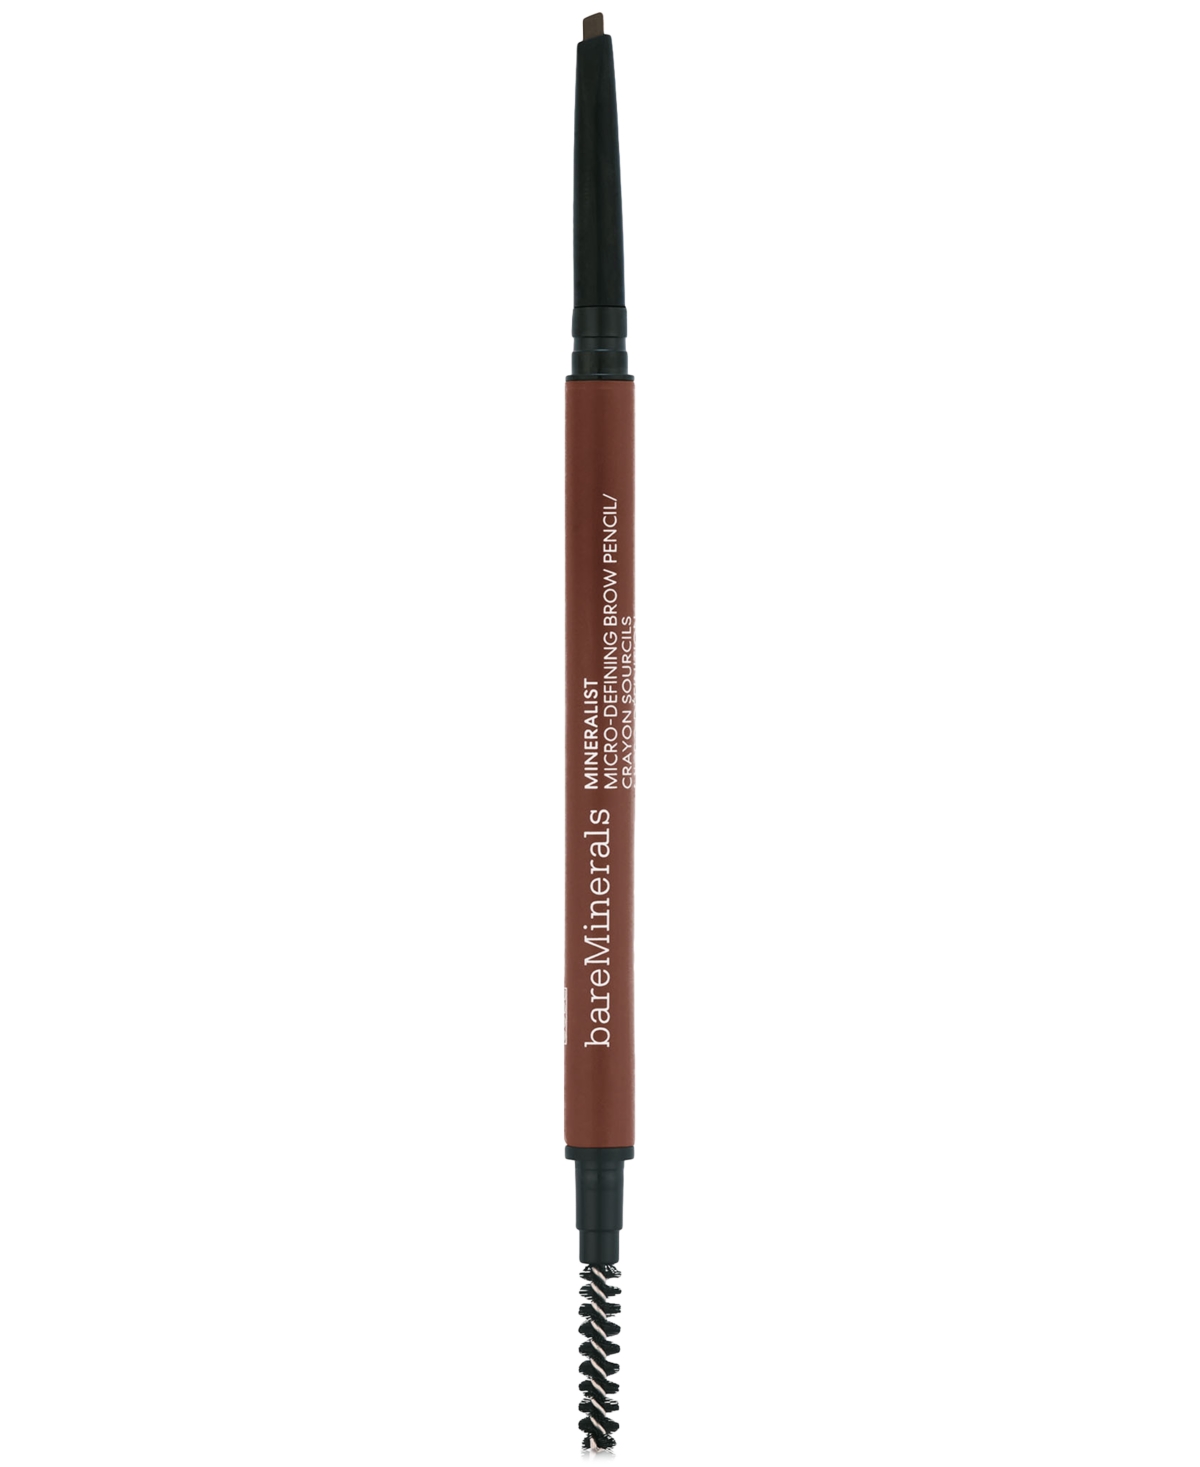 Bareminerals Mineralist Micro-defining Brow Pencil In Chestnut